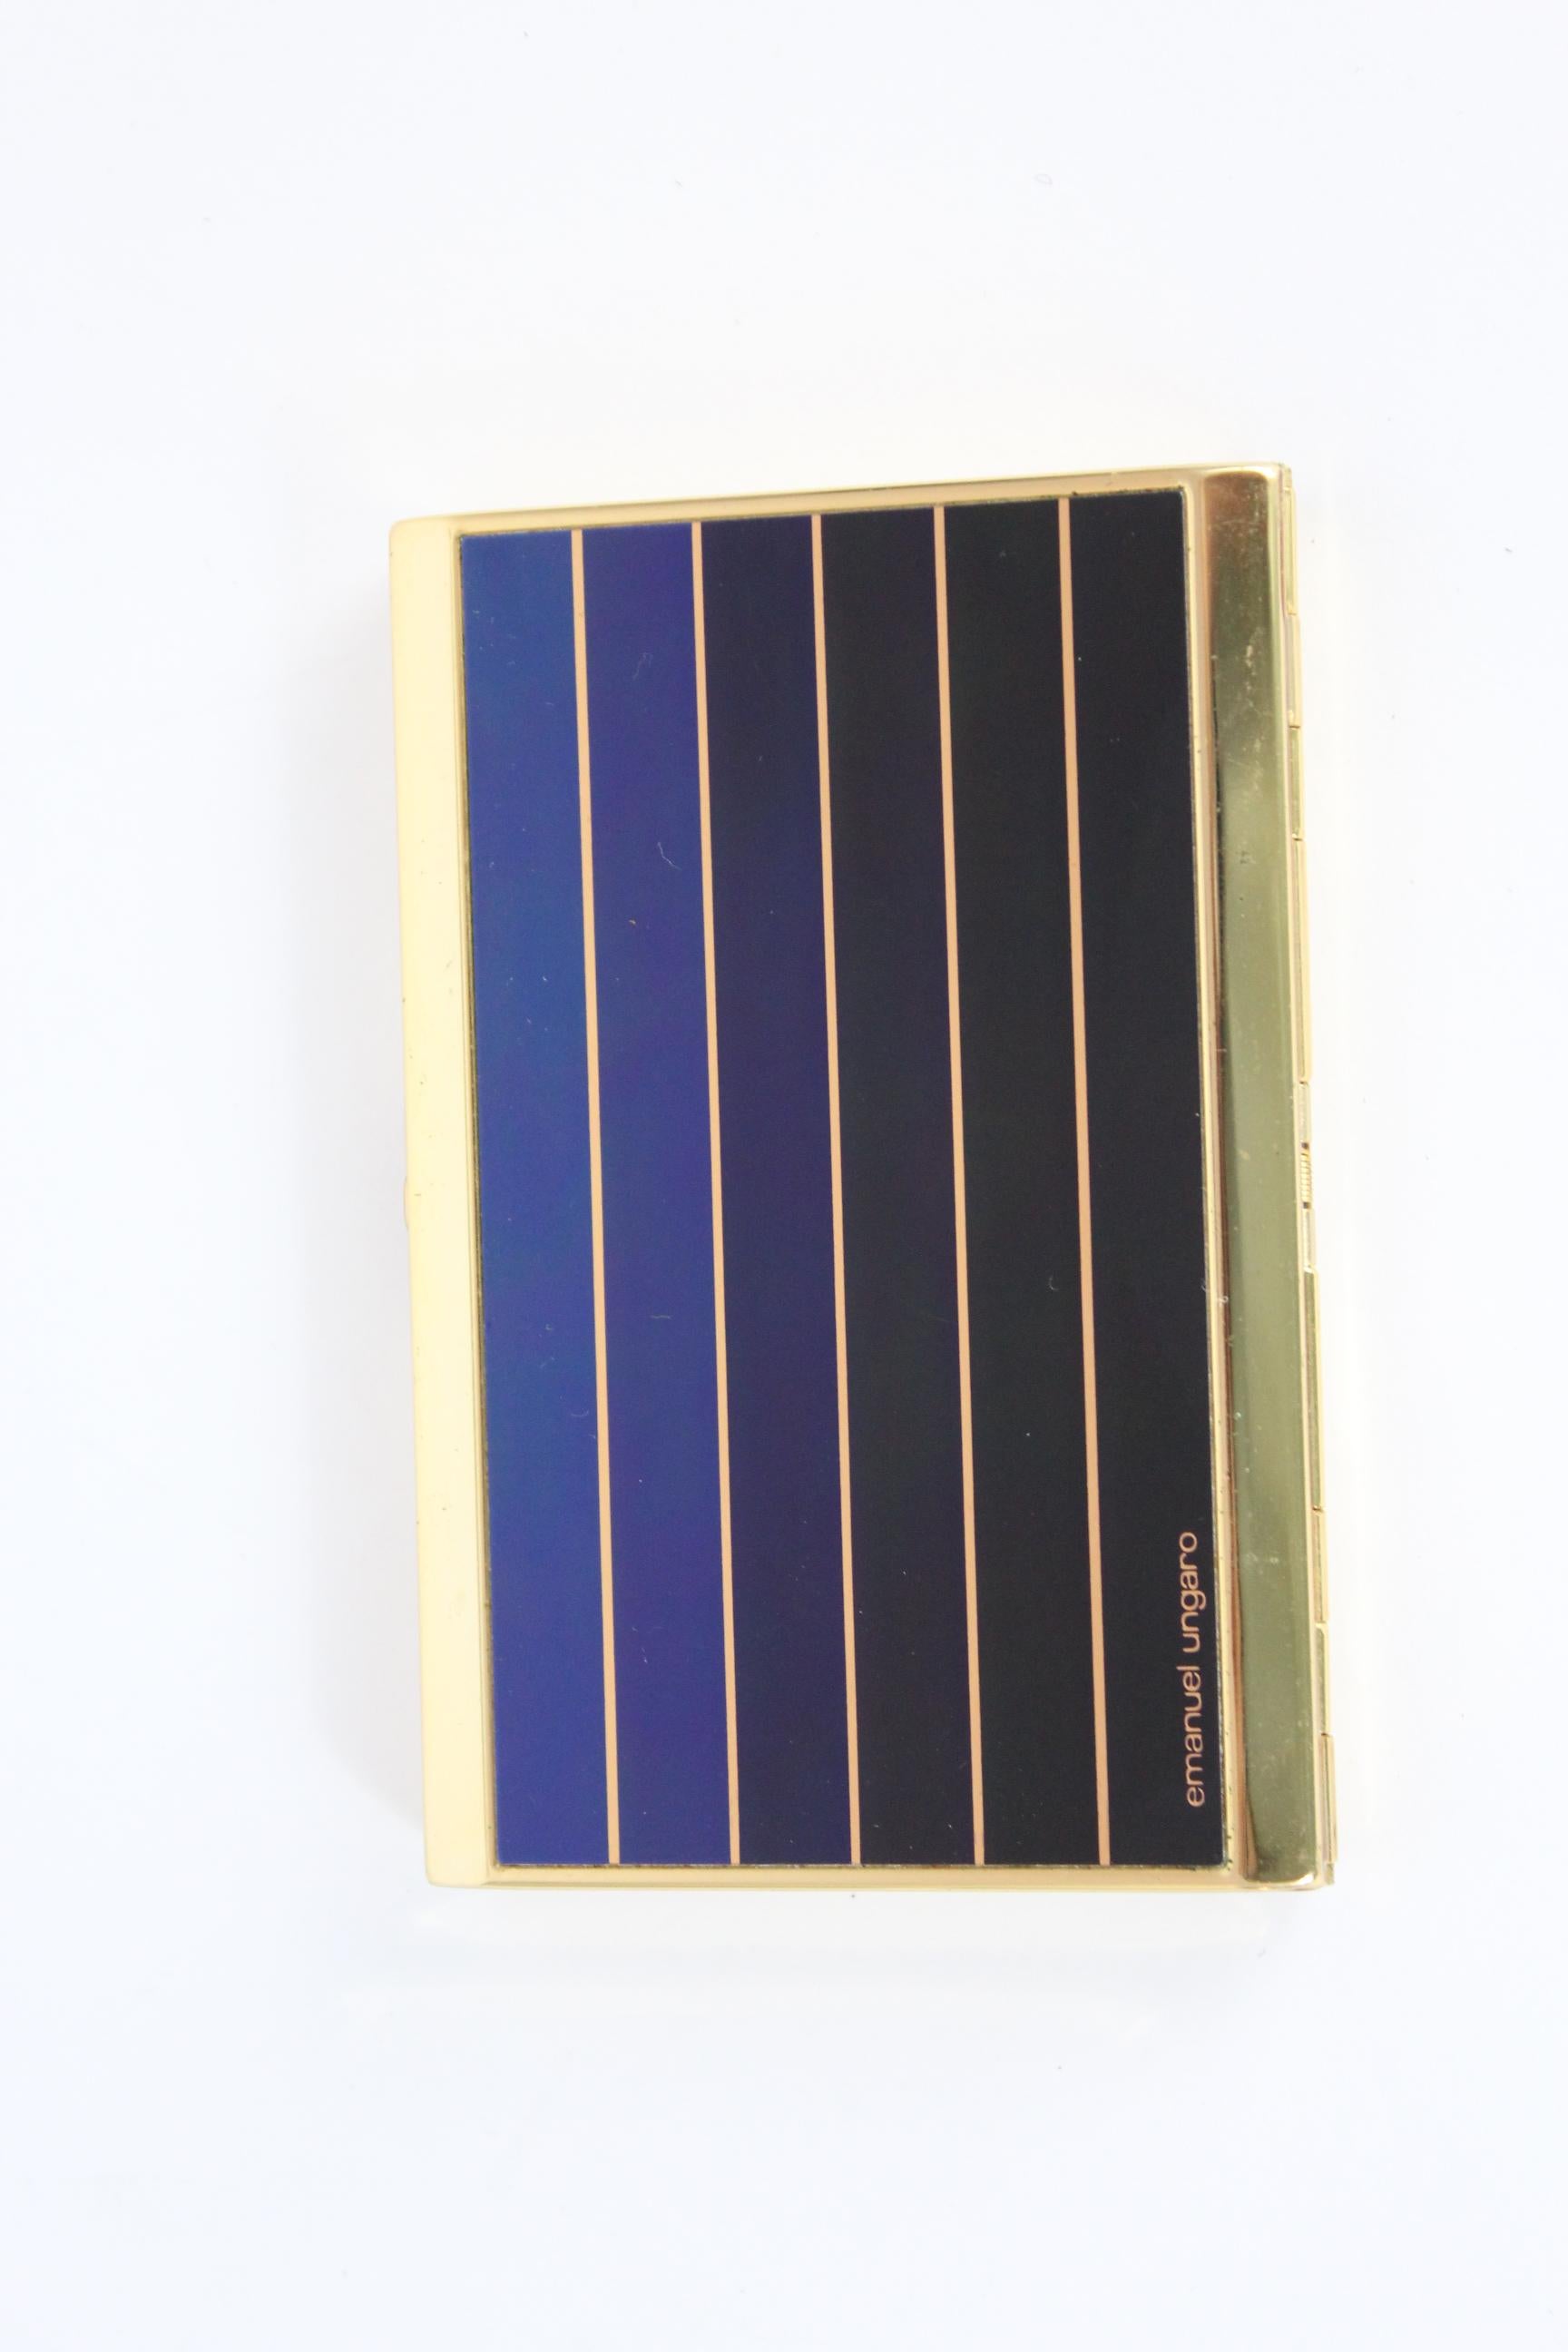 Gray Emanuel Ungaro Gold Blue Metal Pinstripe Vintage Cigarette Case 1980s